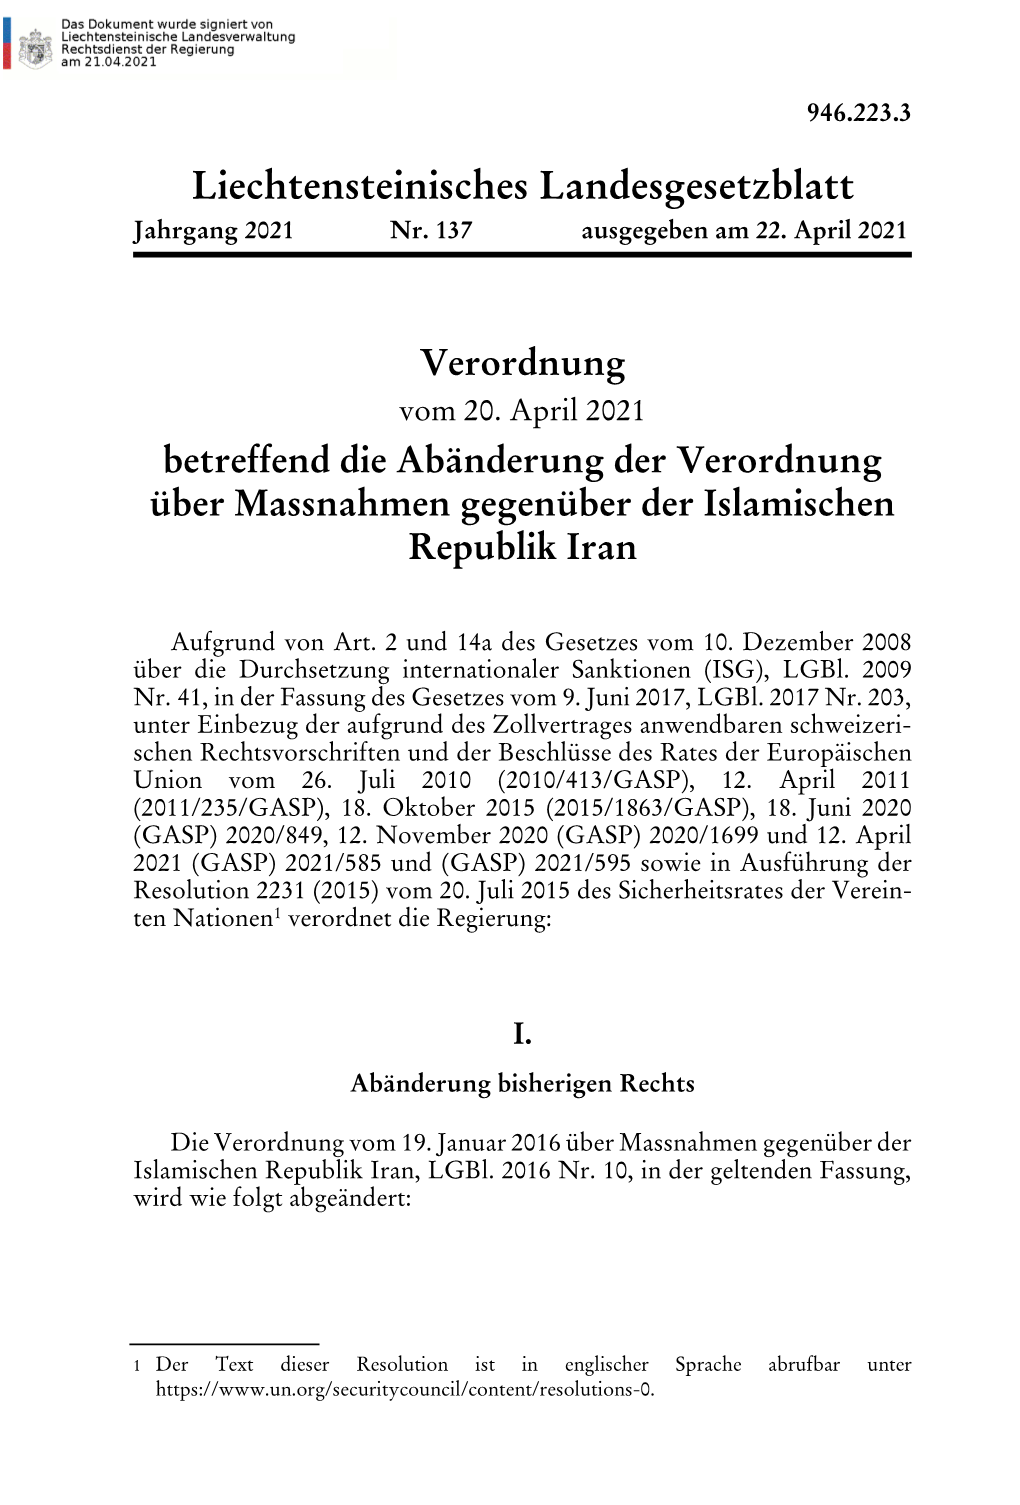 Liechtensteinisches Landesgesetzblatt Jahrgang 2021 Nr